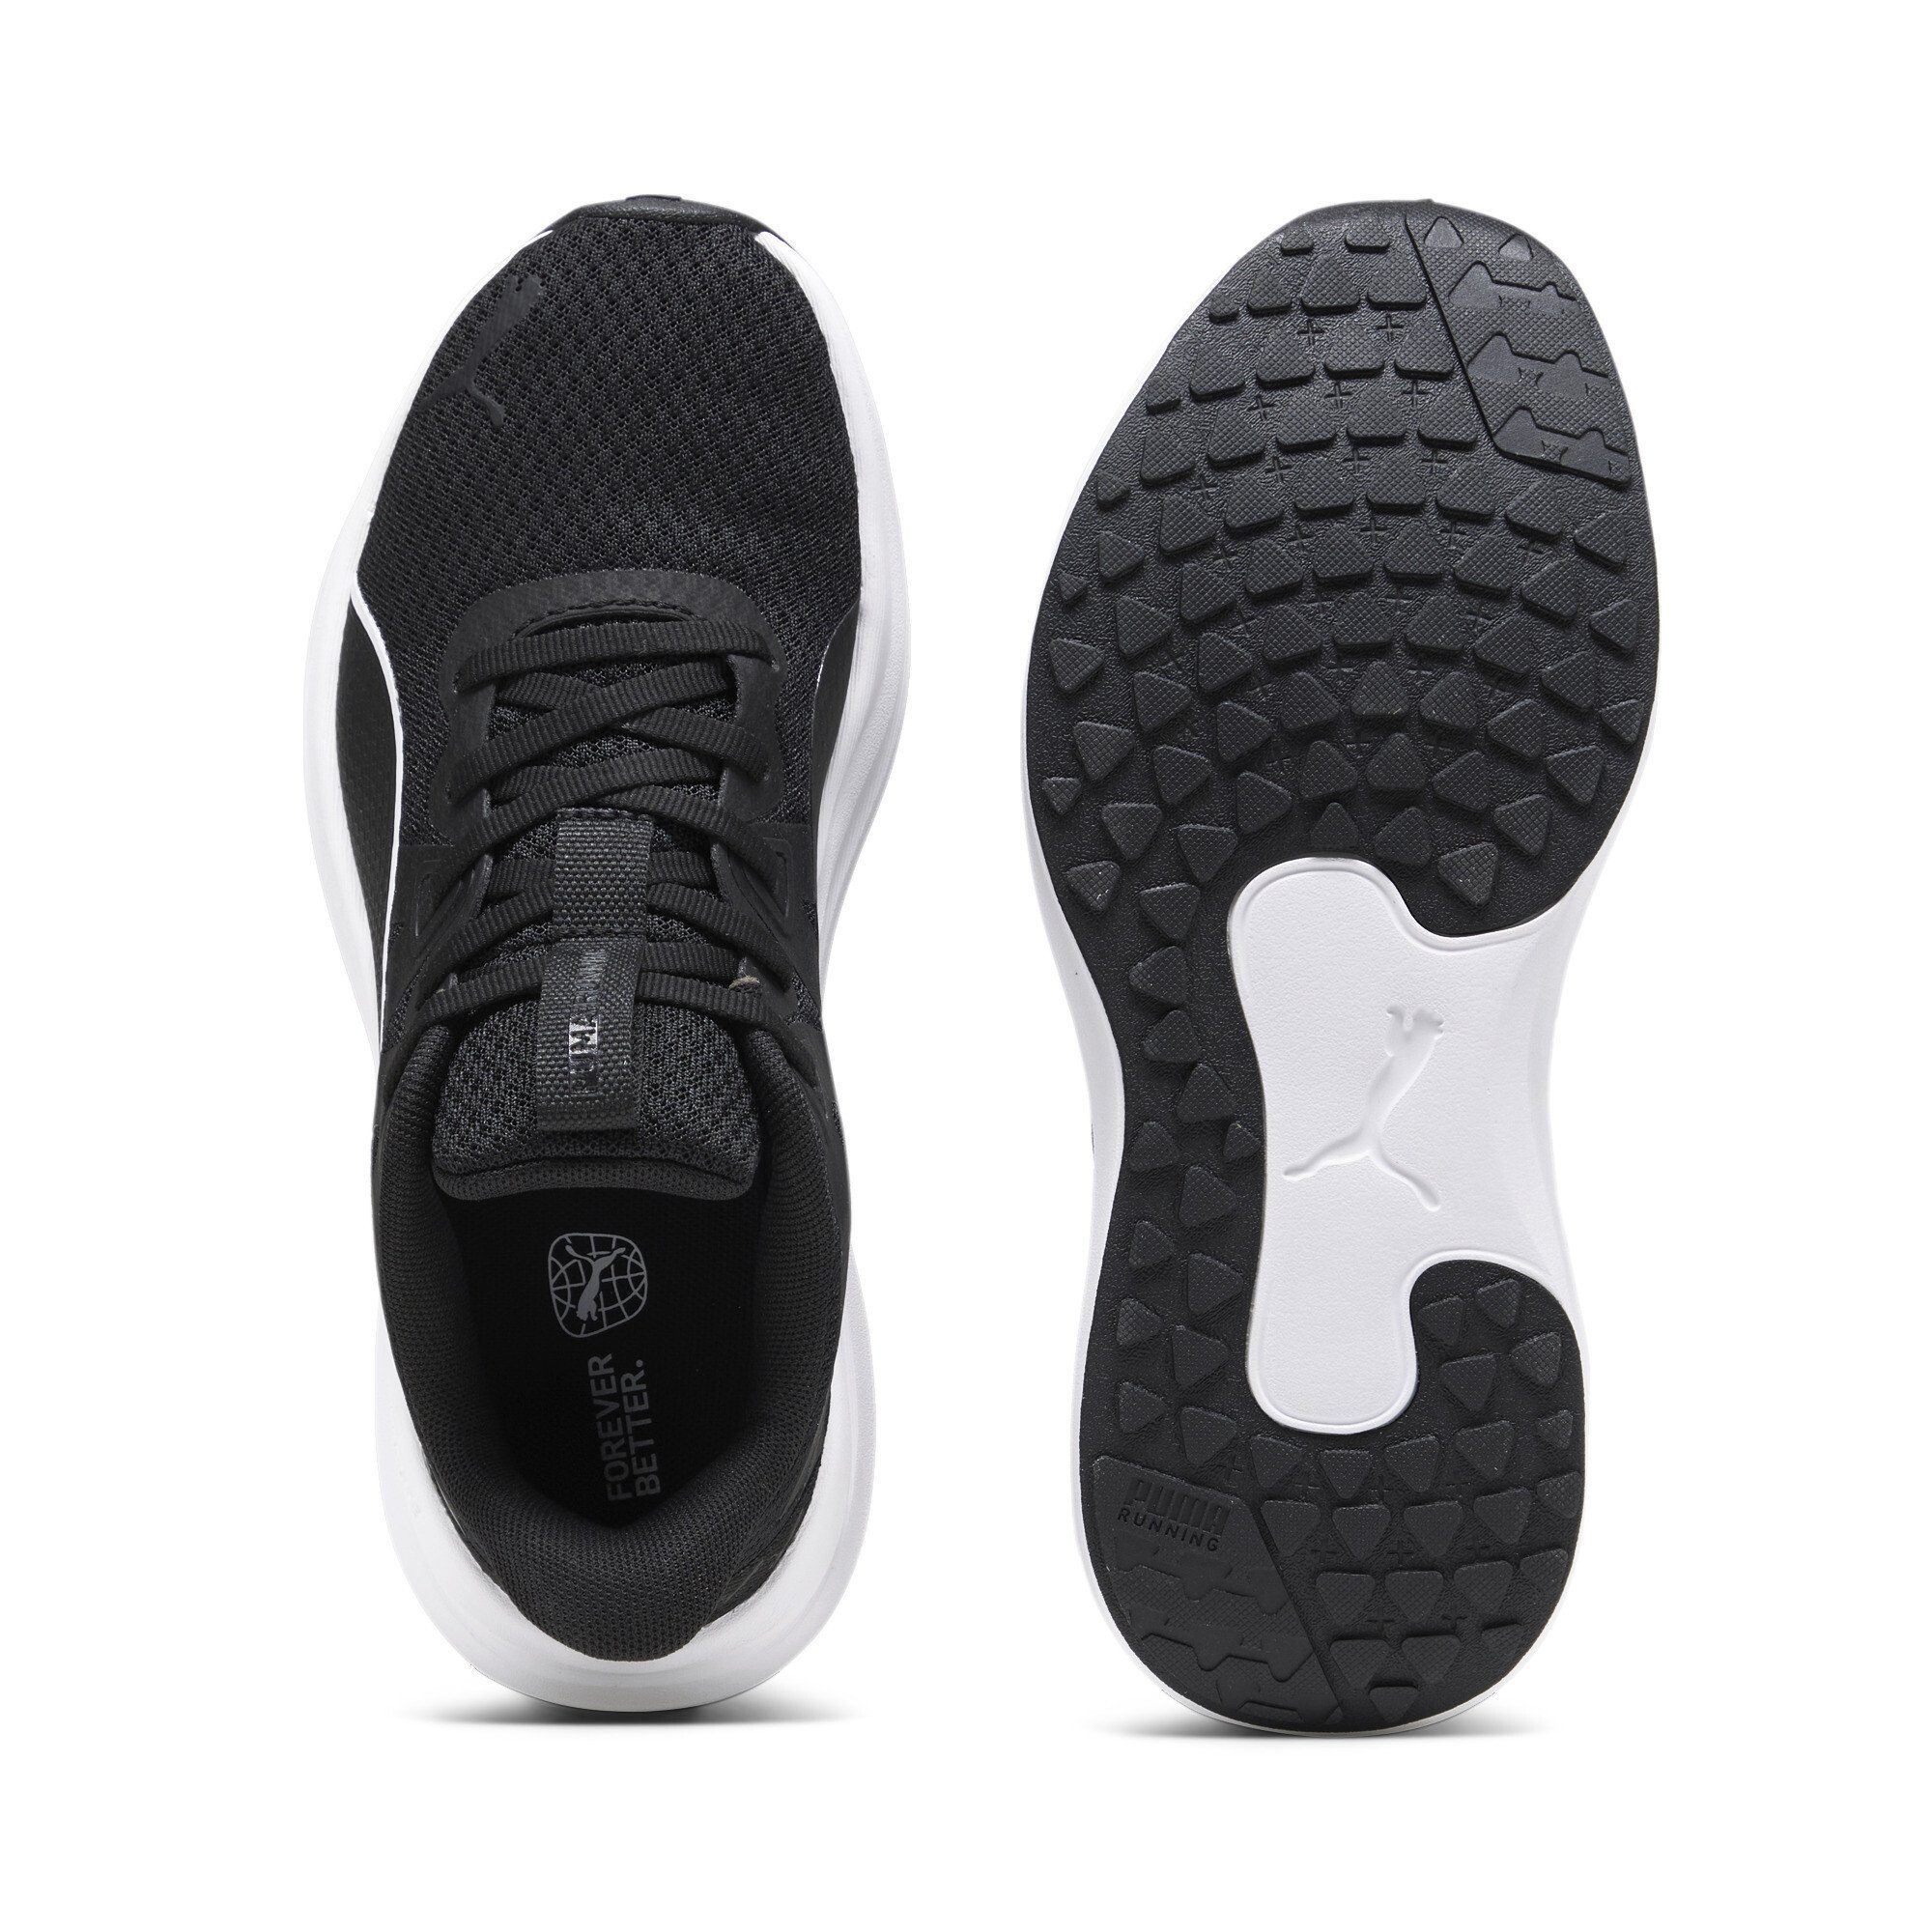 PUMA Reflect Black White Jugendliche Lite Sneaker Laufschuhe